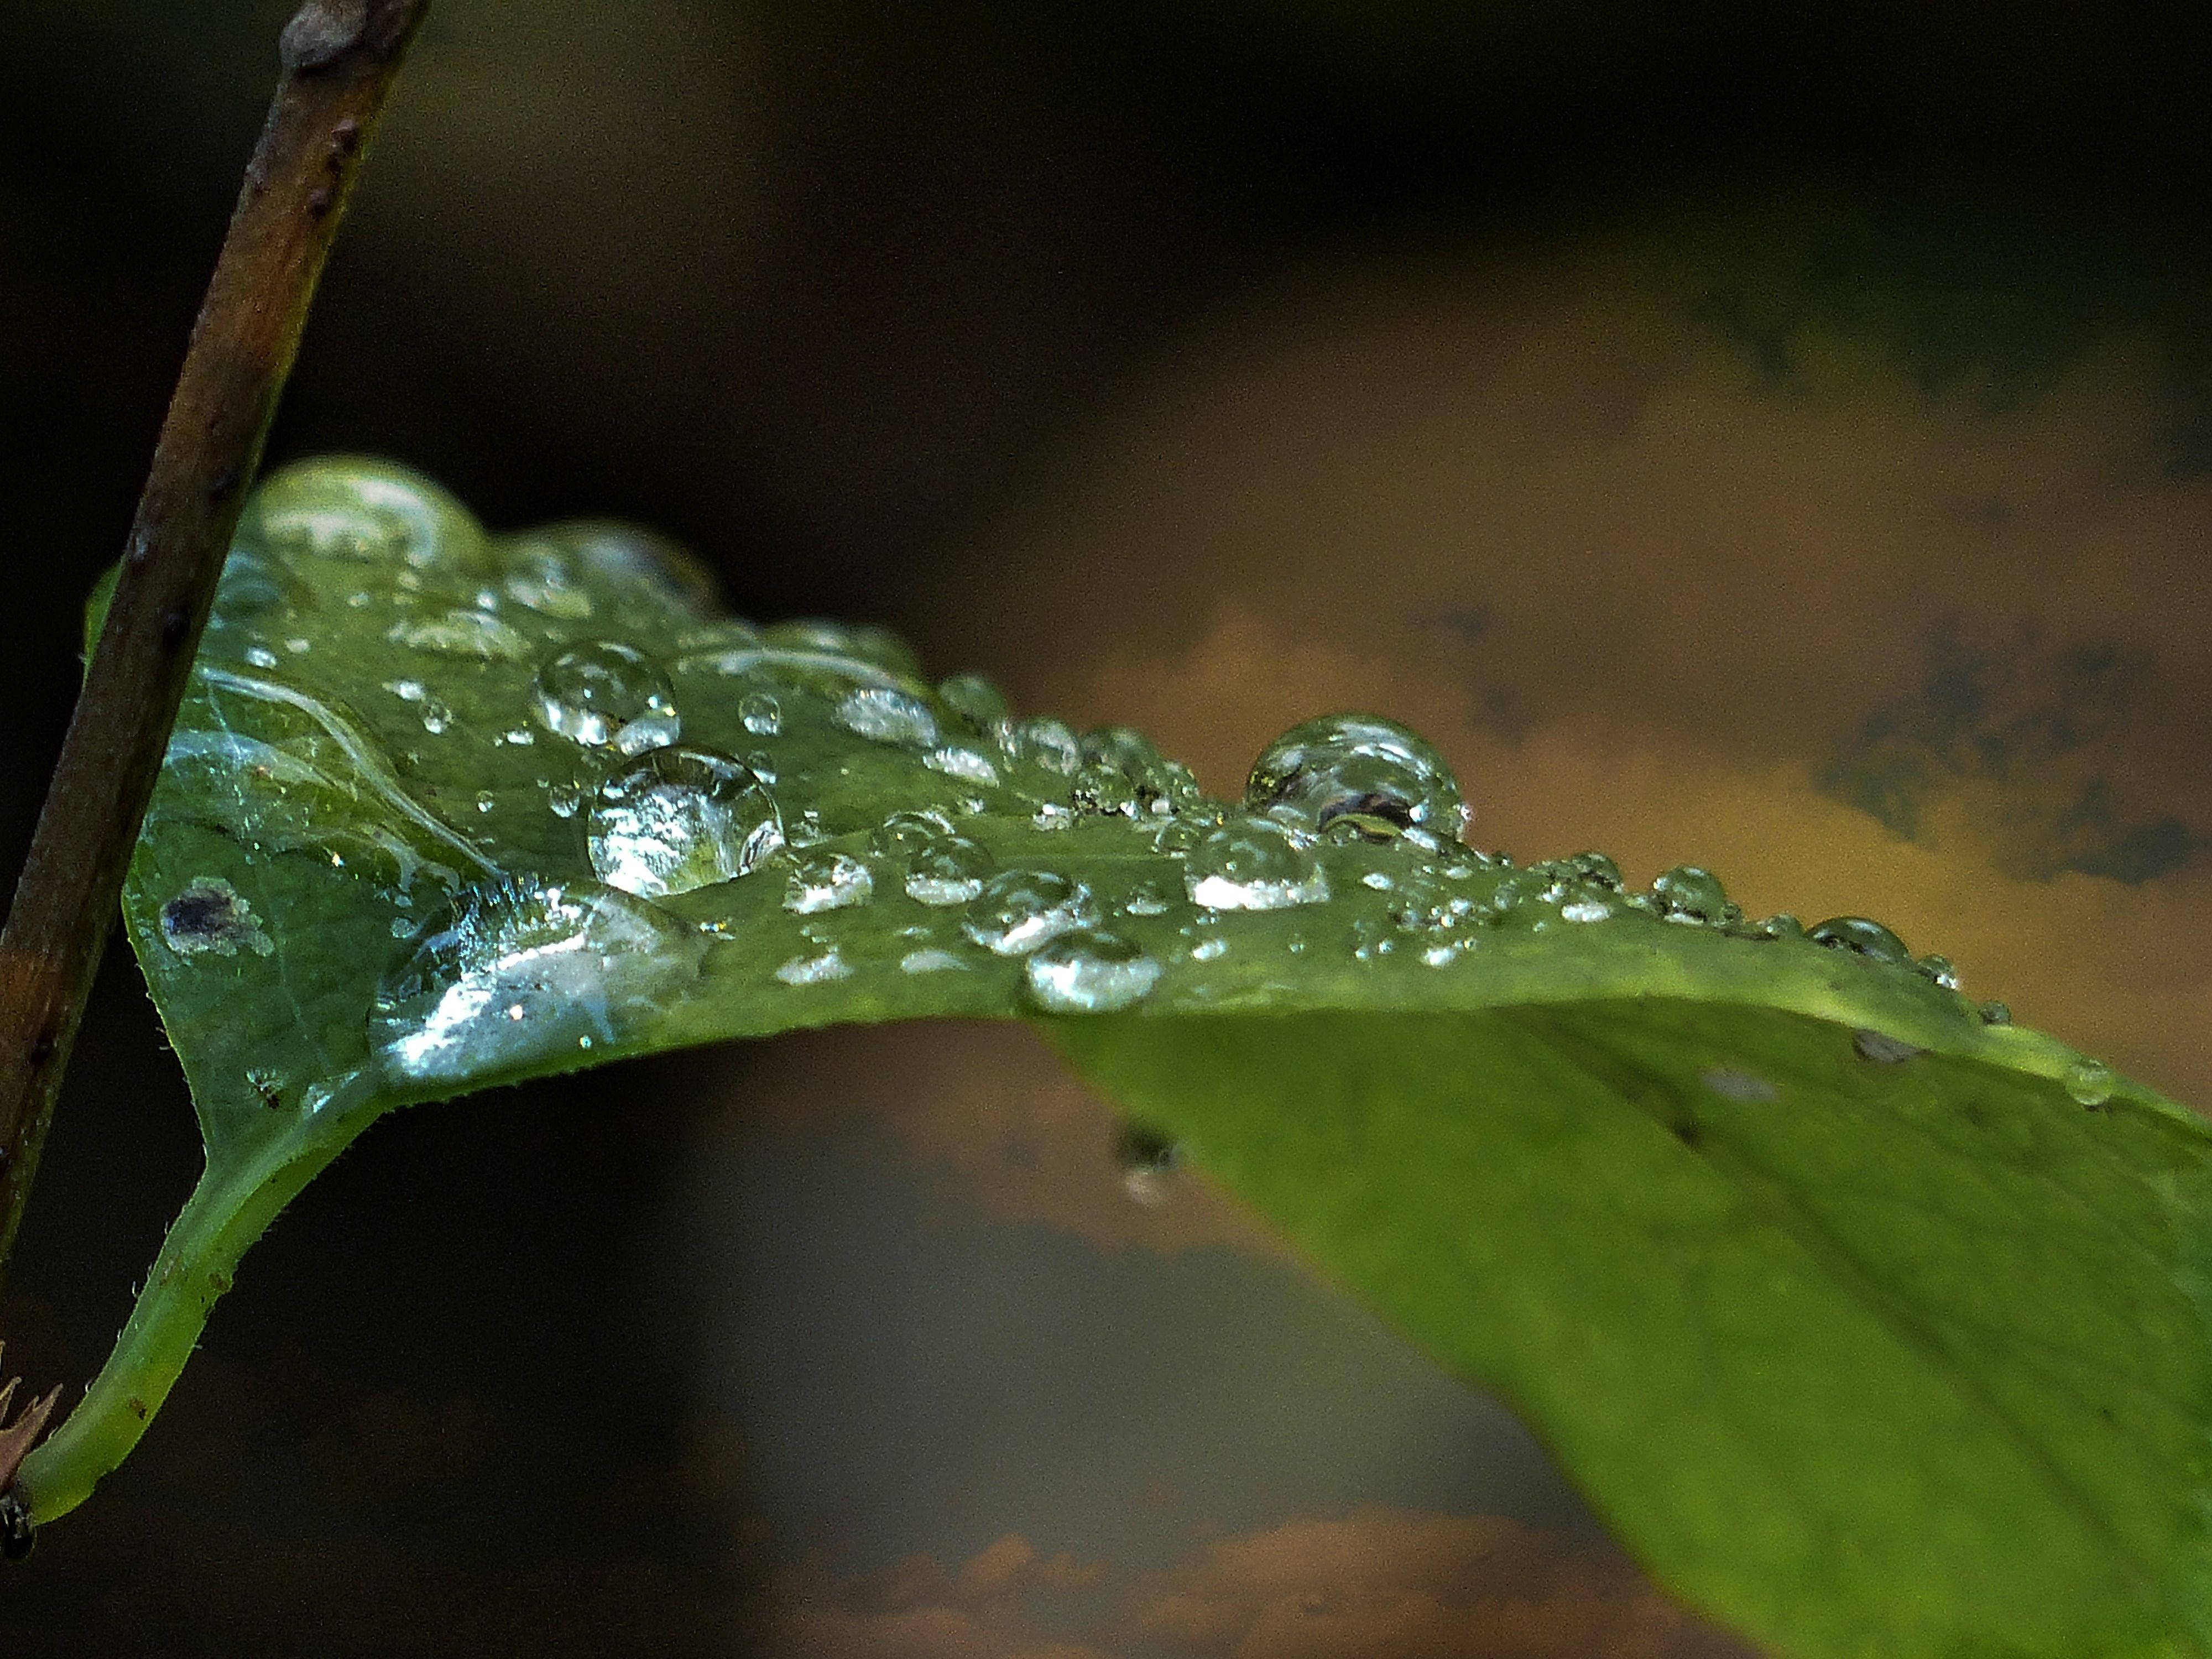 dew drops on green leaf free image